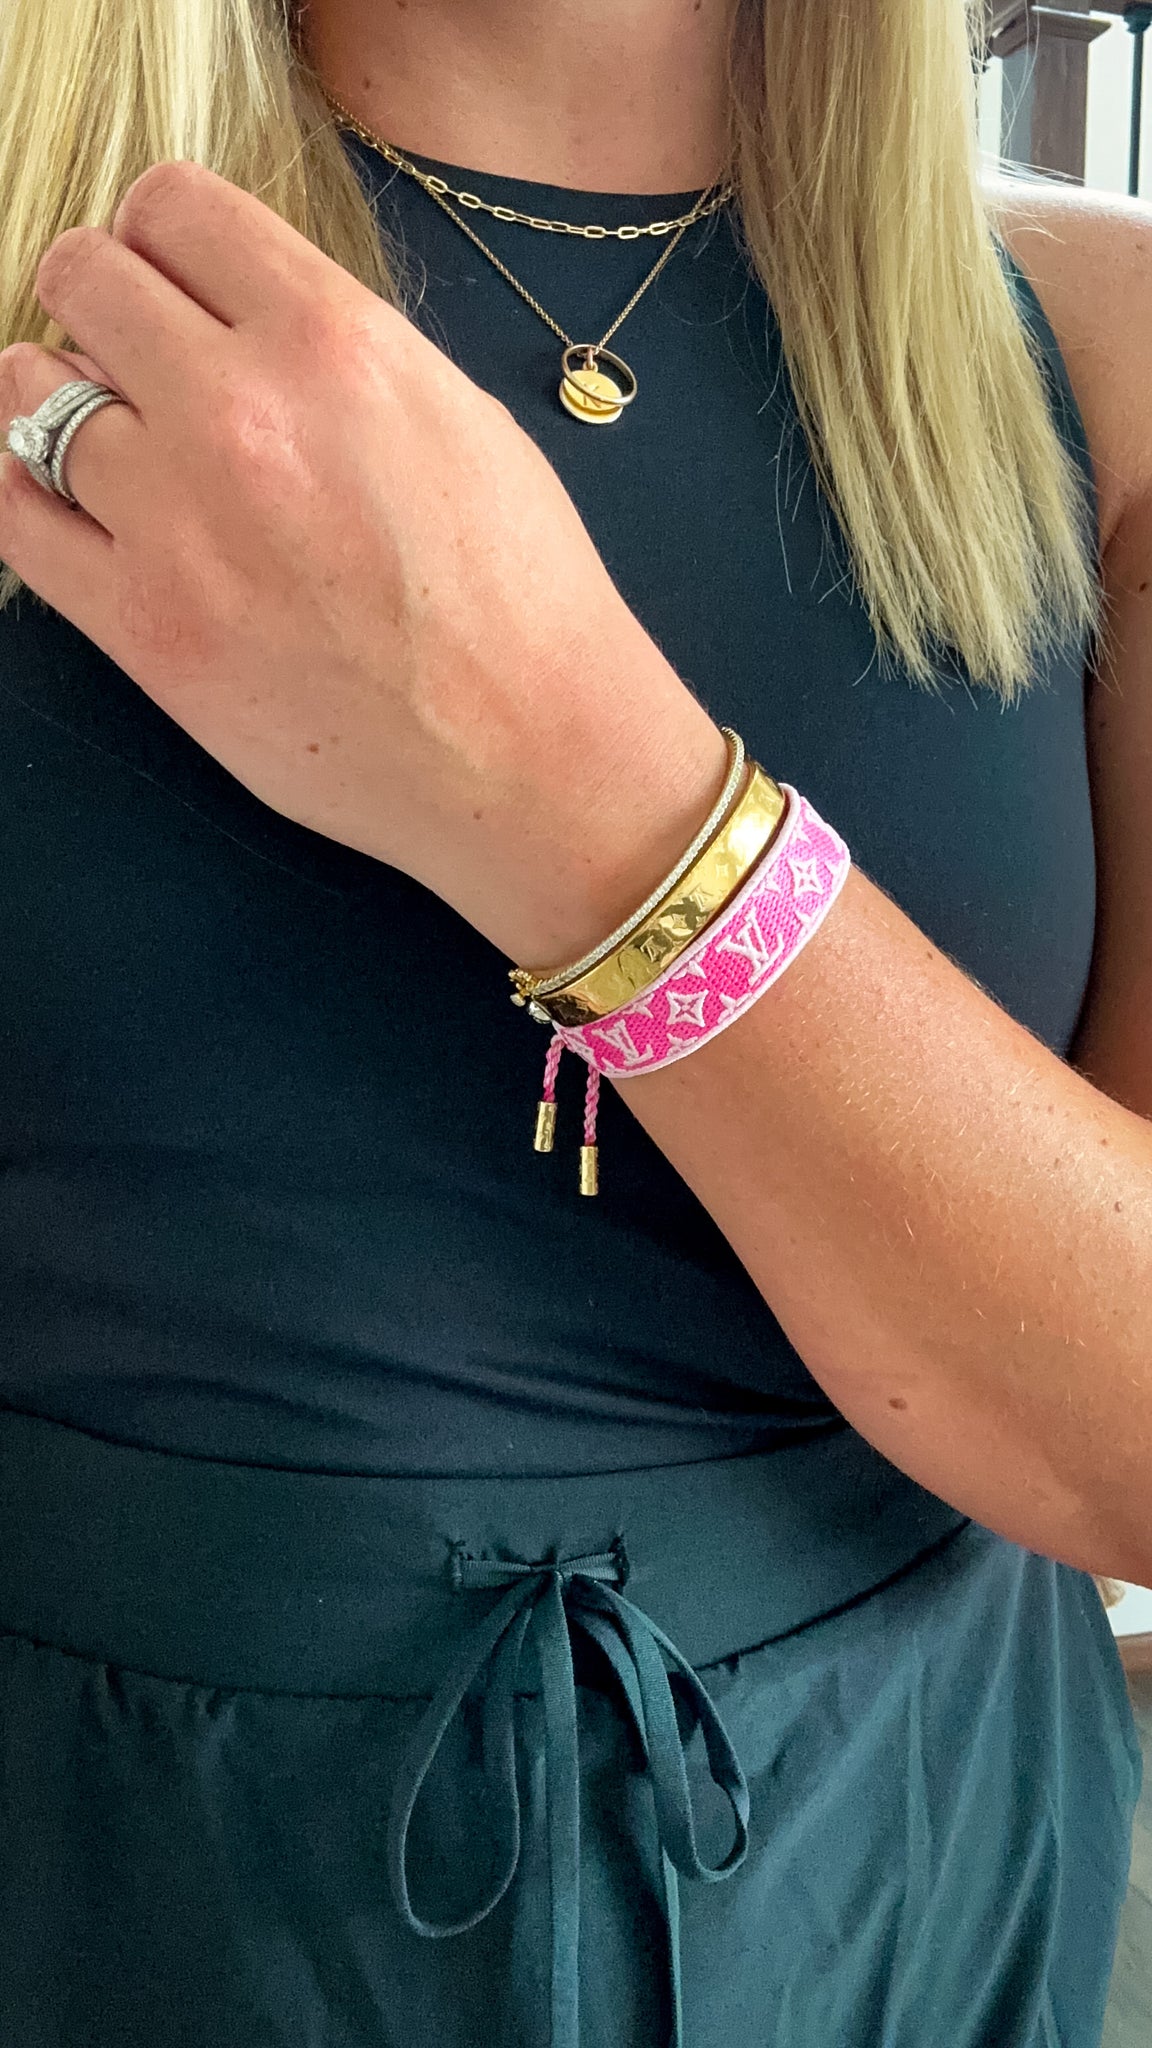 Louis Vuitton Buddy Bracelet Pink – DAC